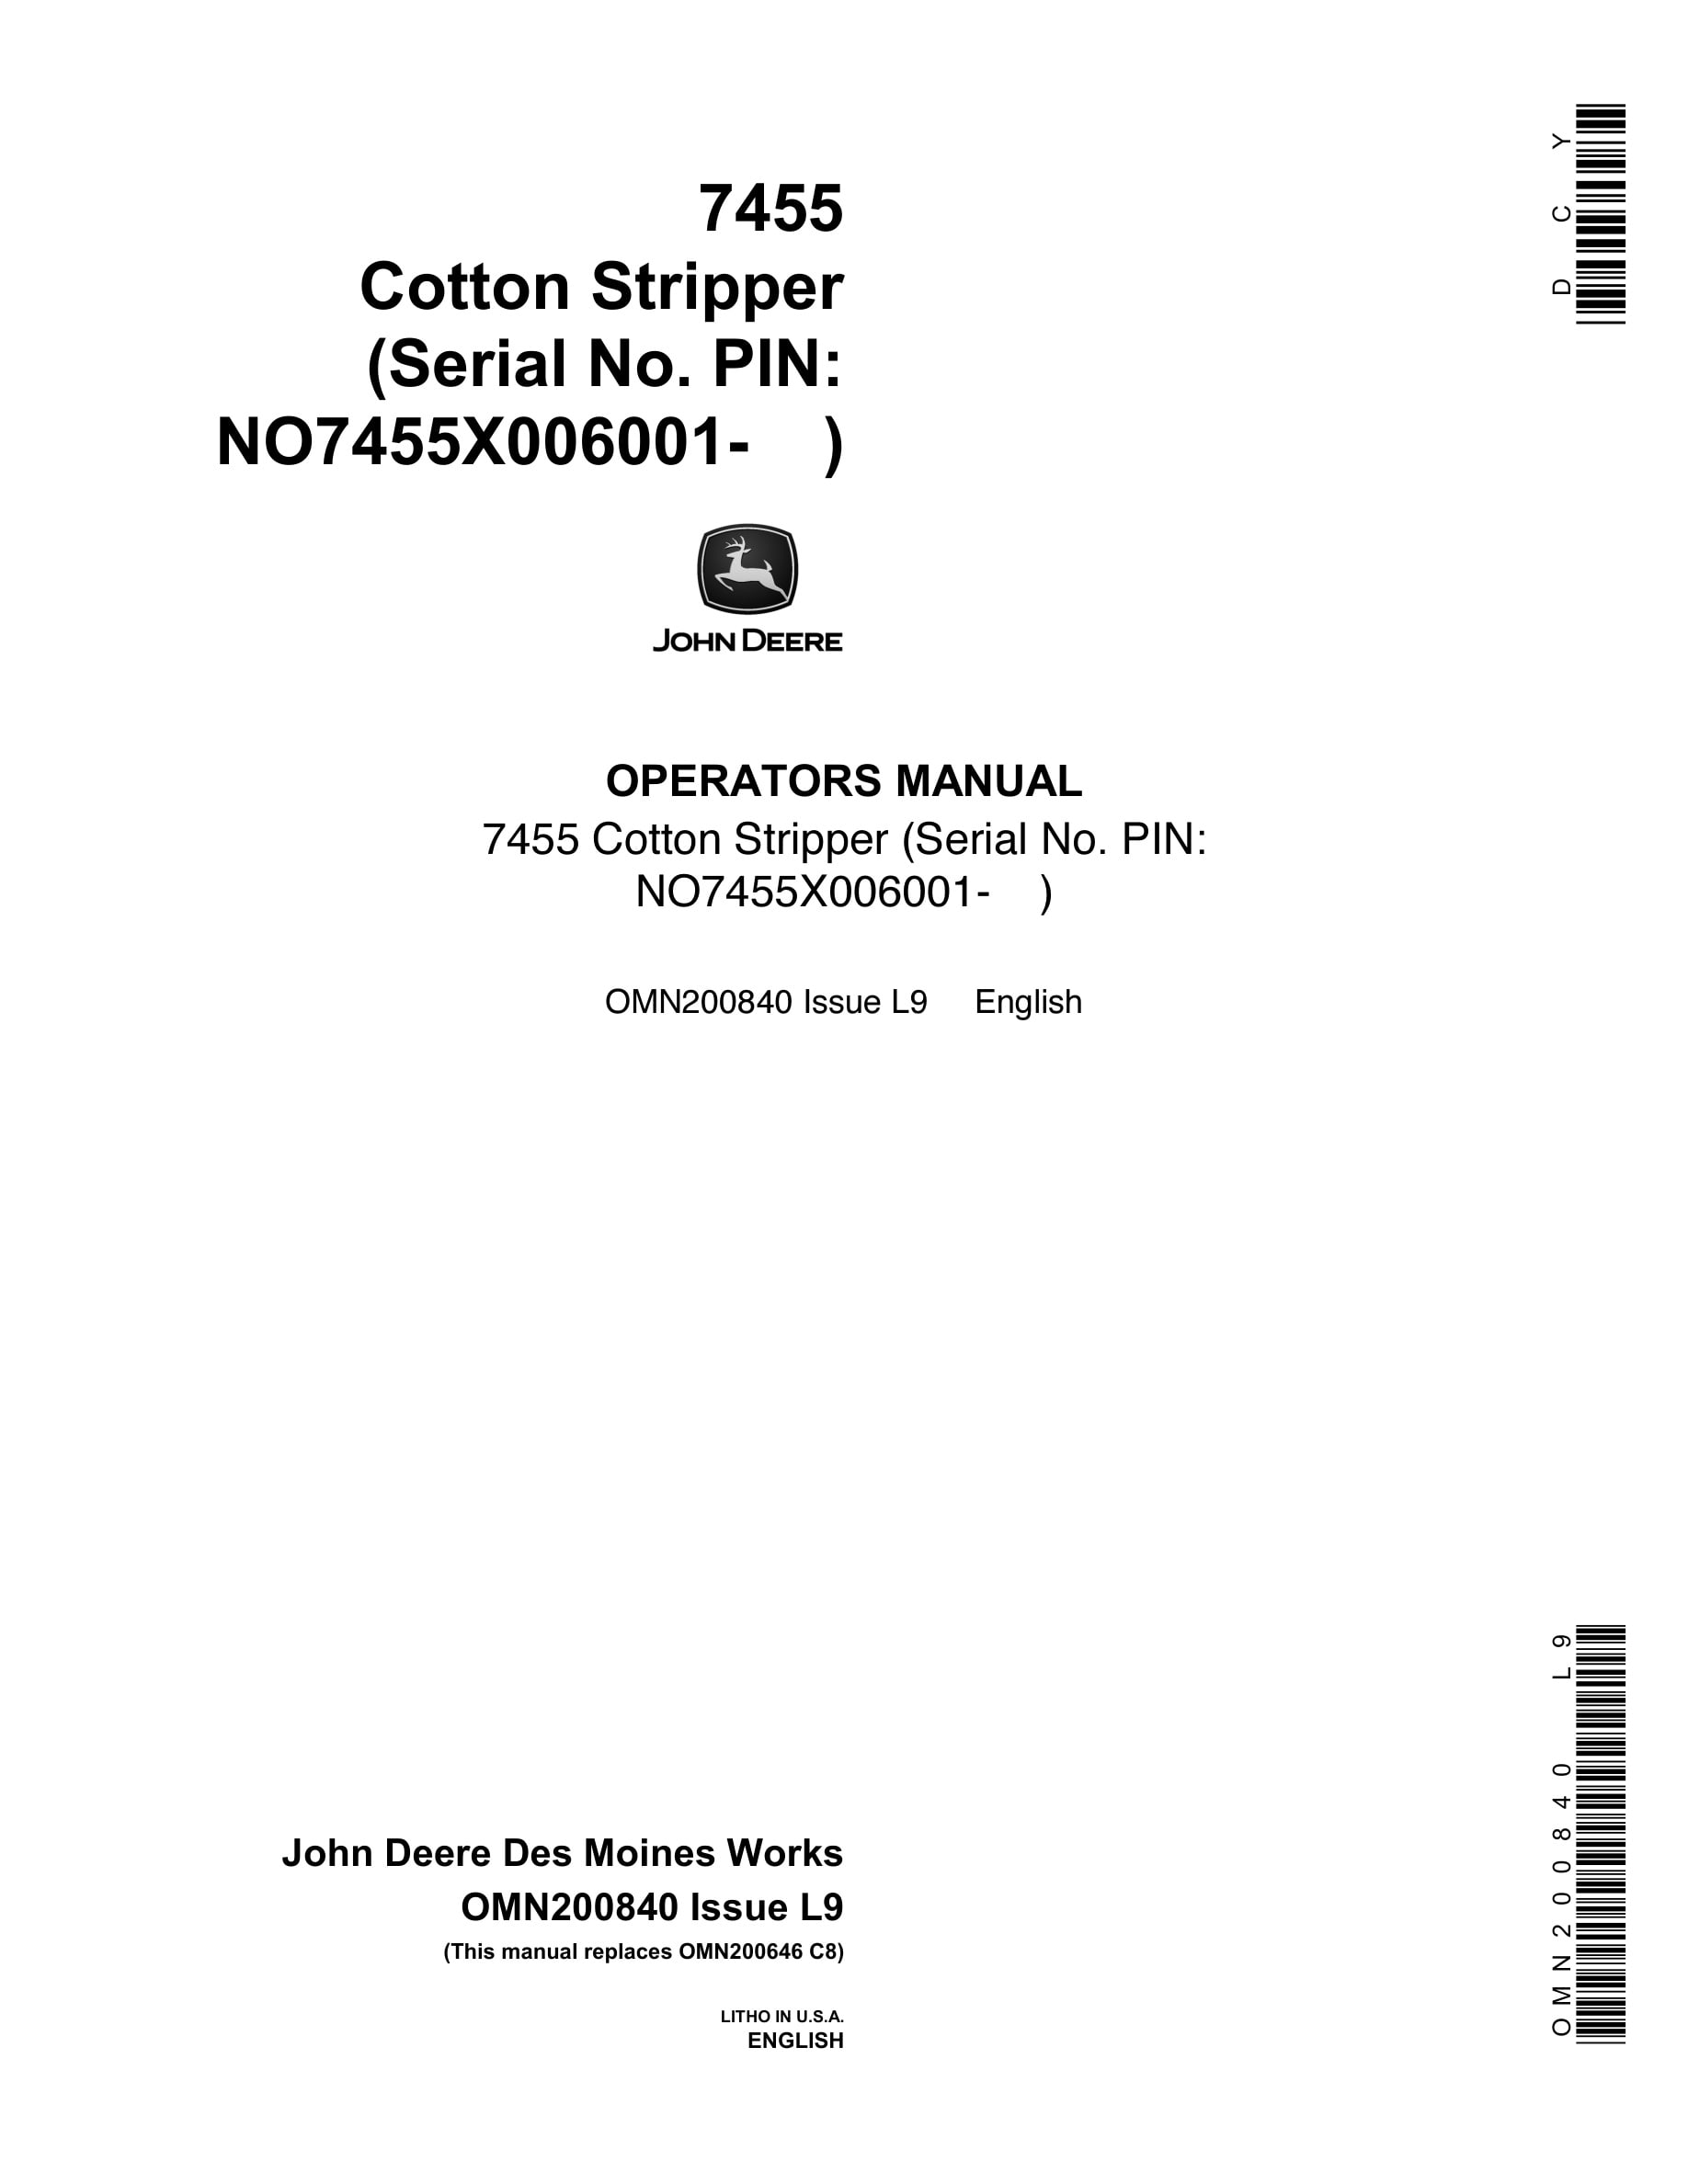 John Deere 7455 Cotton Stripper Operator Manual OMN200840-1